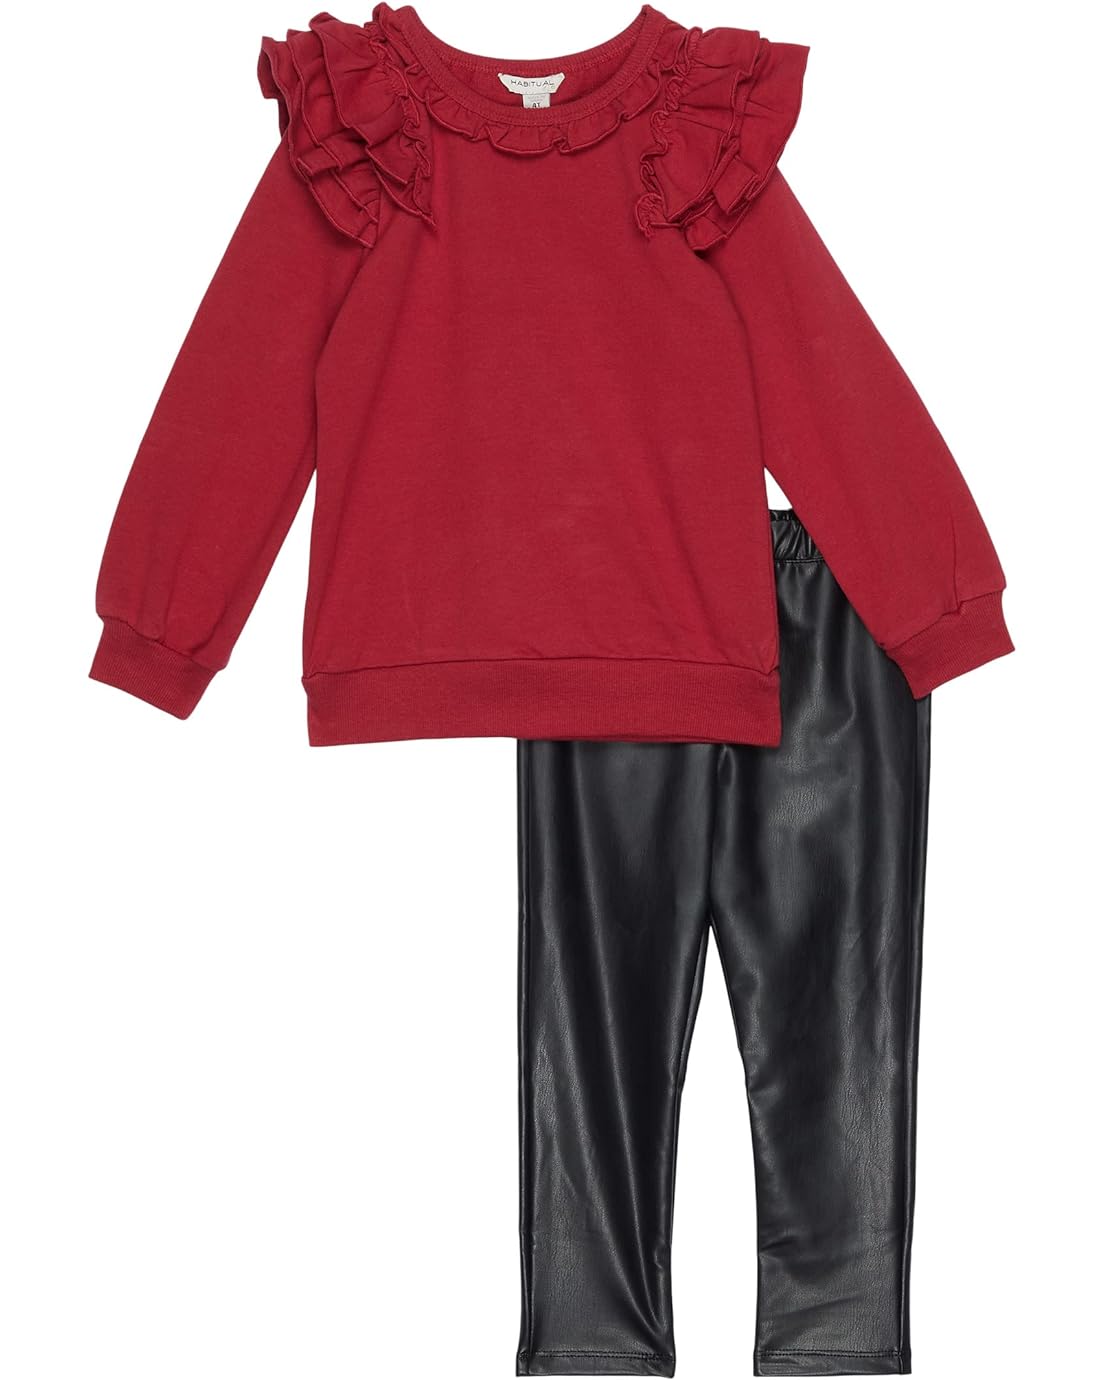  HABITUAL girl Ruffle Sleeve Pullover Set (Toddleru002FLittle Kids)